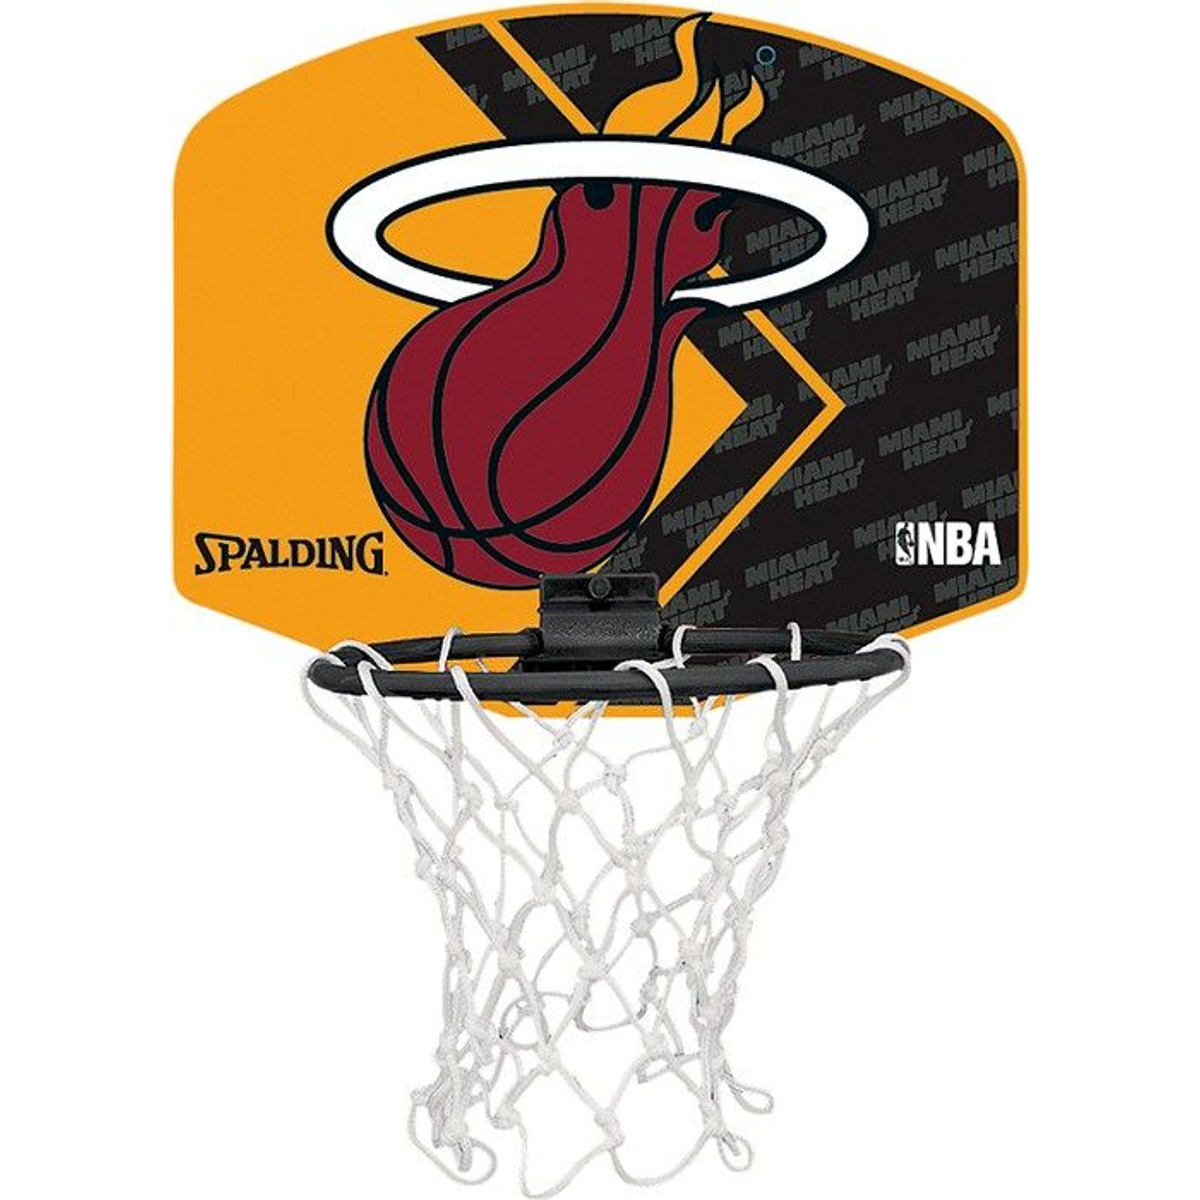 Spalding Miami Heat Mini-Basket